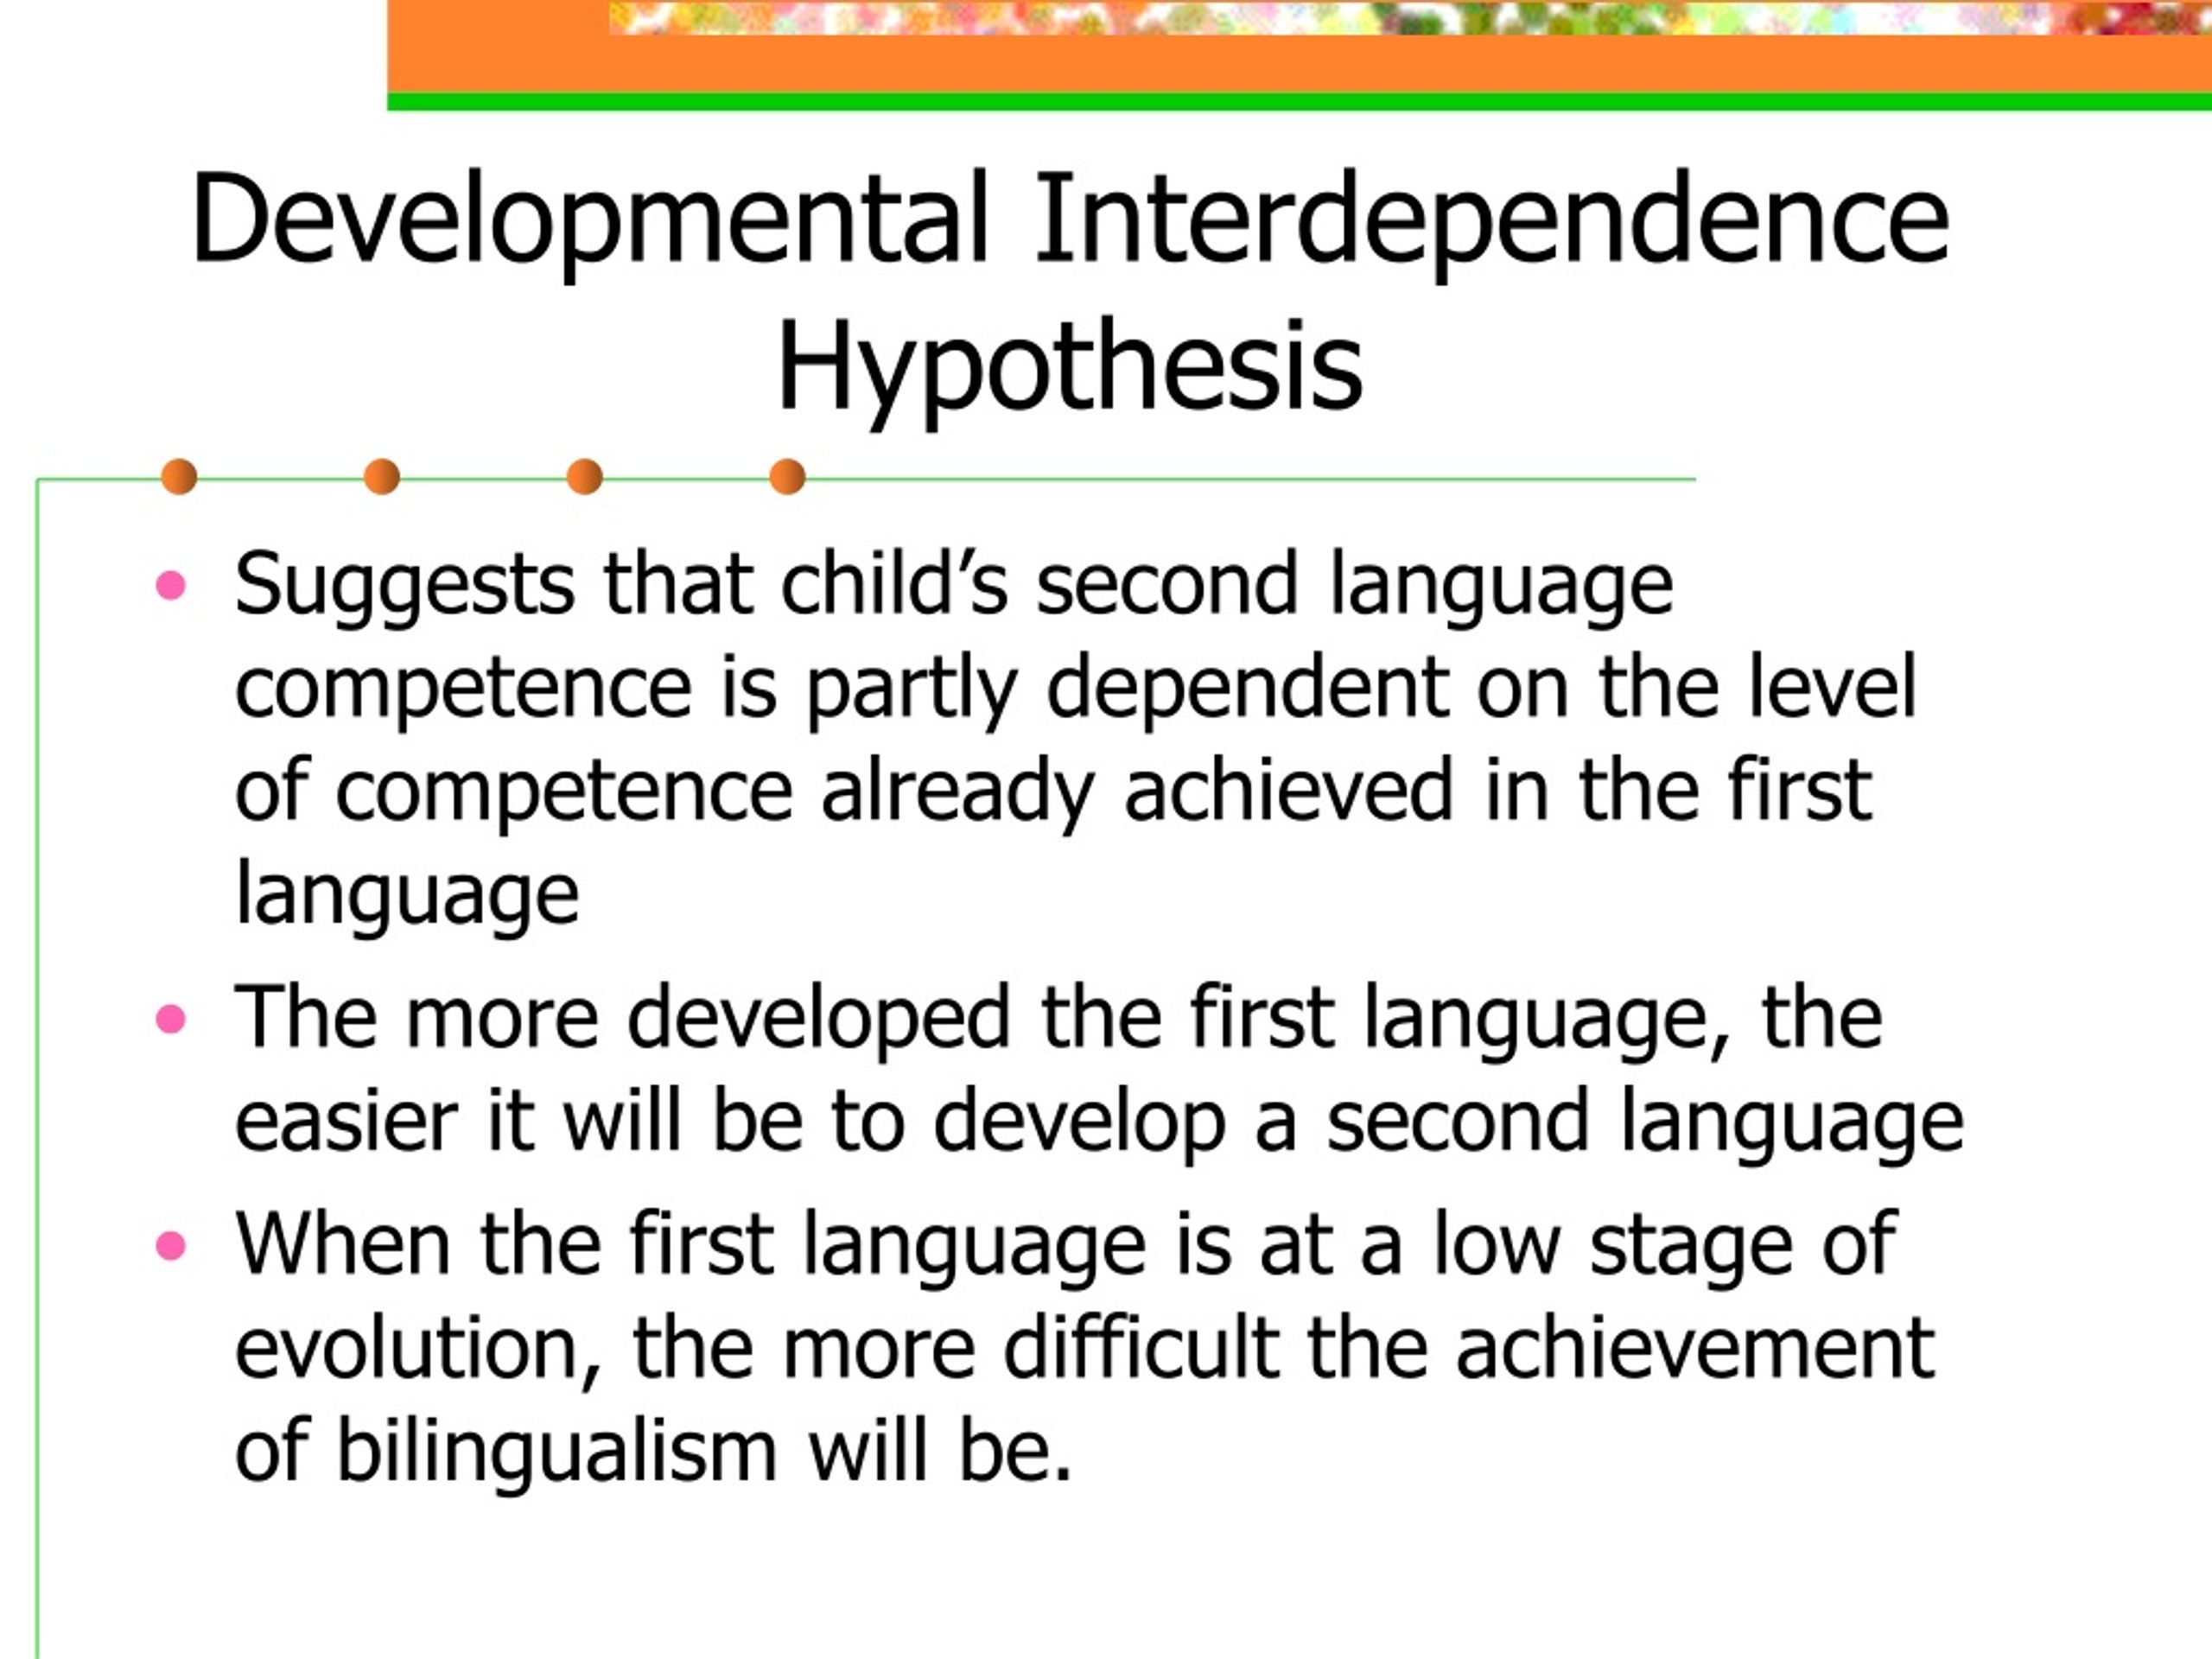 the developmental interdependence hypothesis